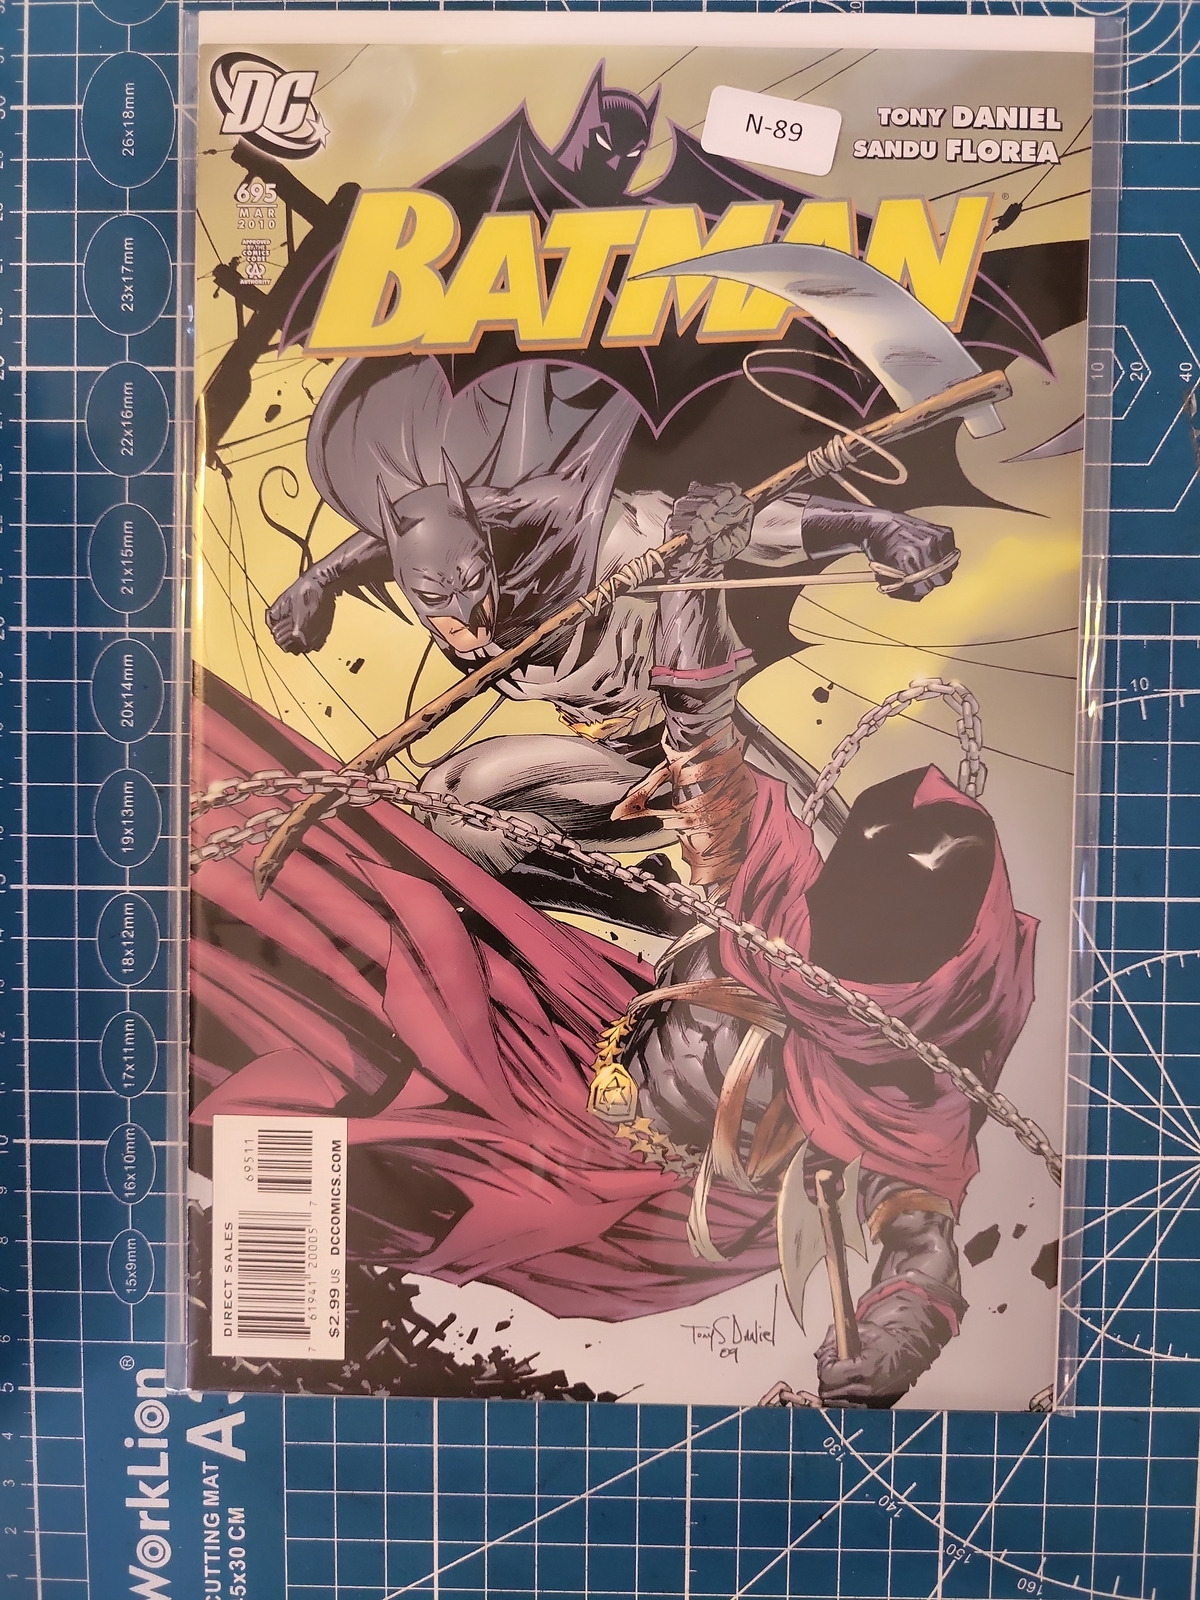 BATMAN #695 VOL. 1 9.0+ DC COMIC BOOK N-89